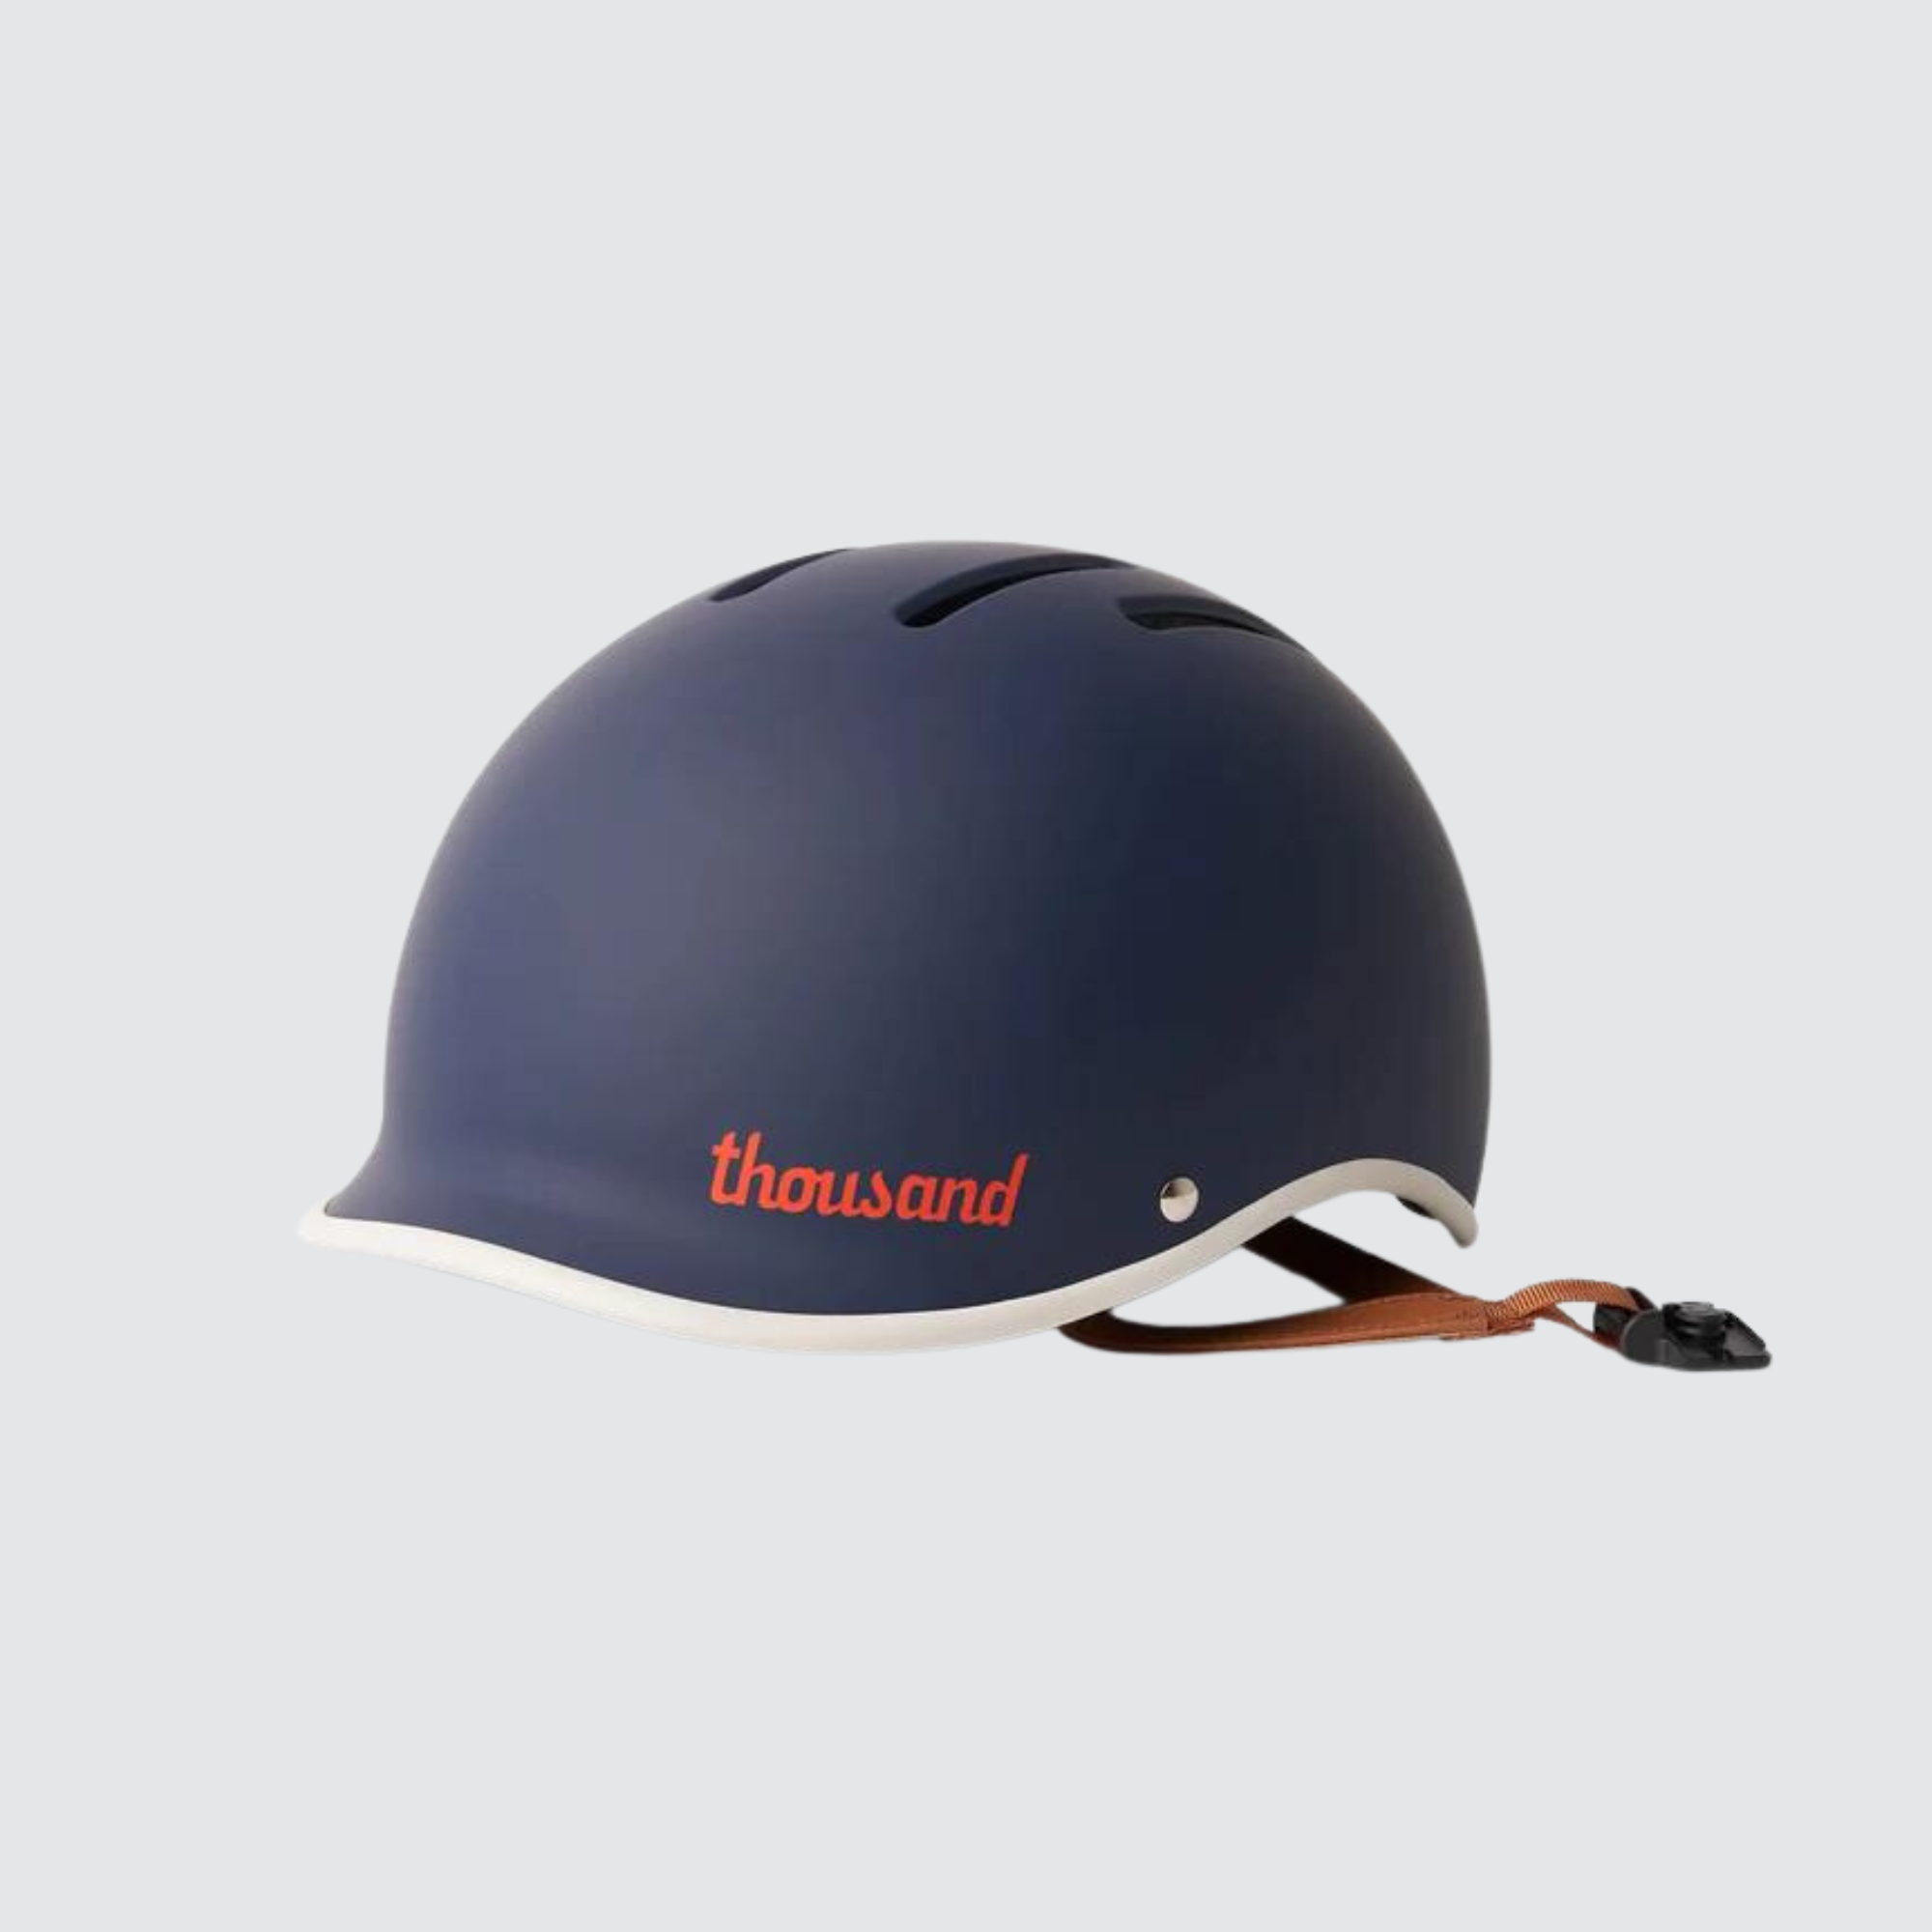 thousand heritage 2.0 bike helmet navy blue